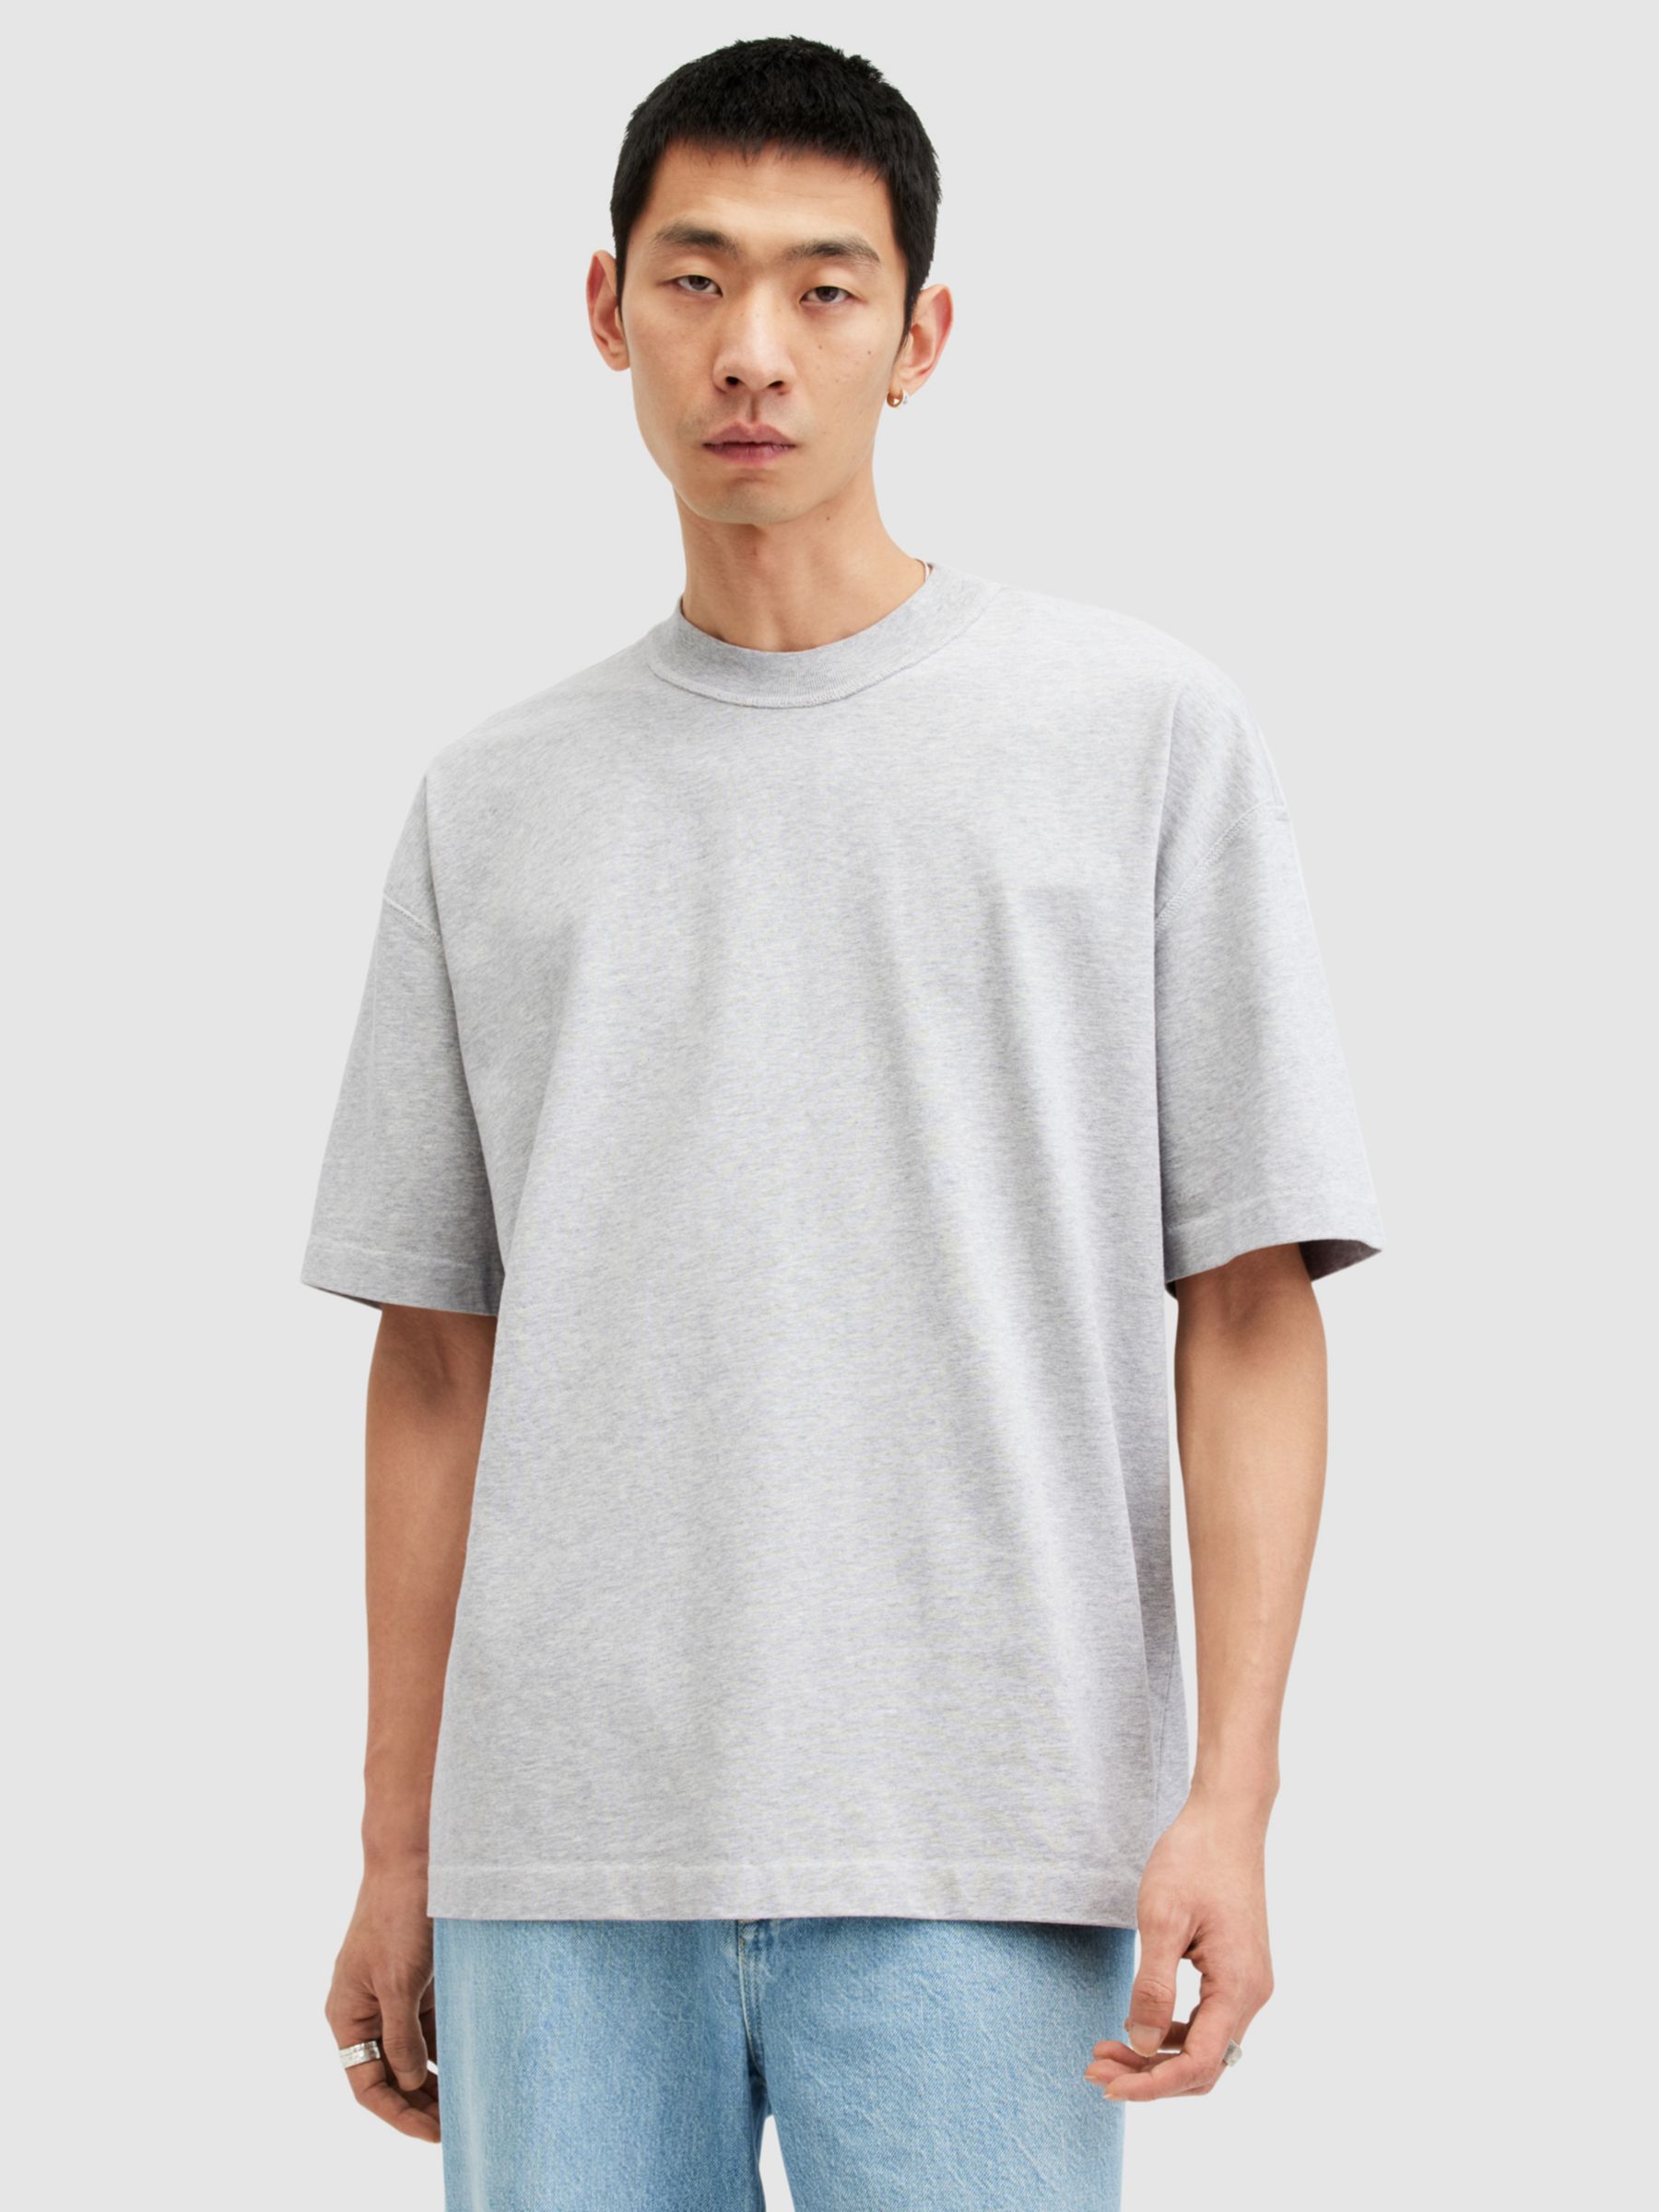 AllSaints Isac Short Sleeve Crew Neck T-Shirt, Grey Marl, L